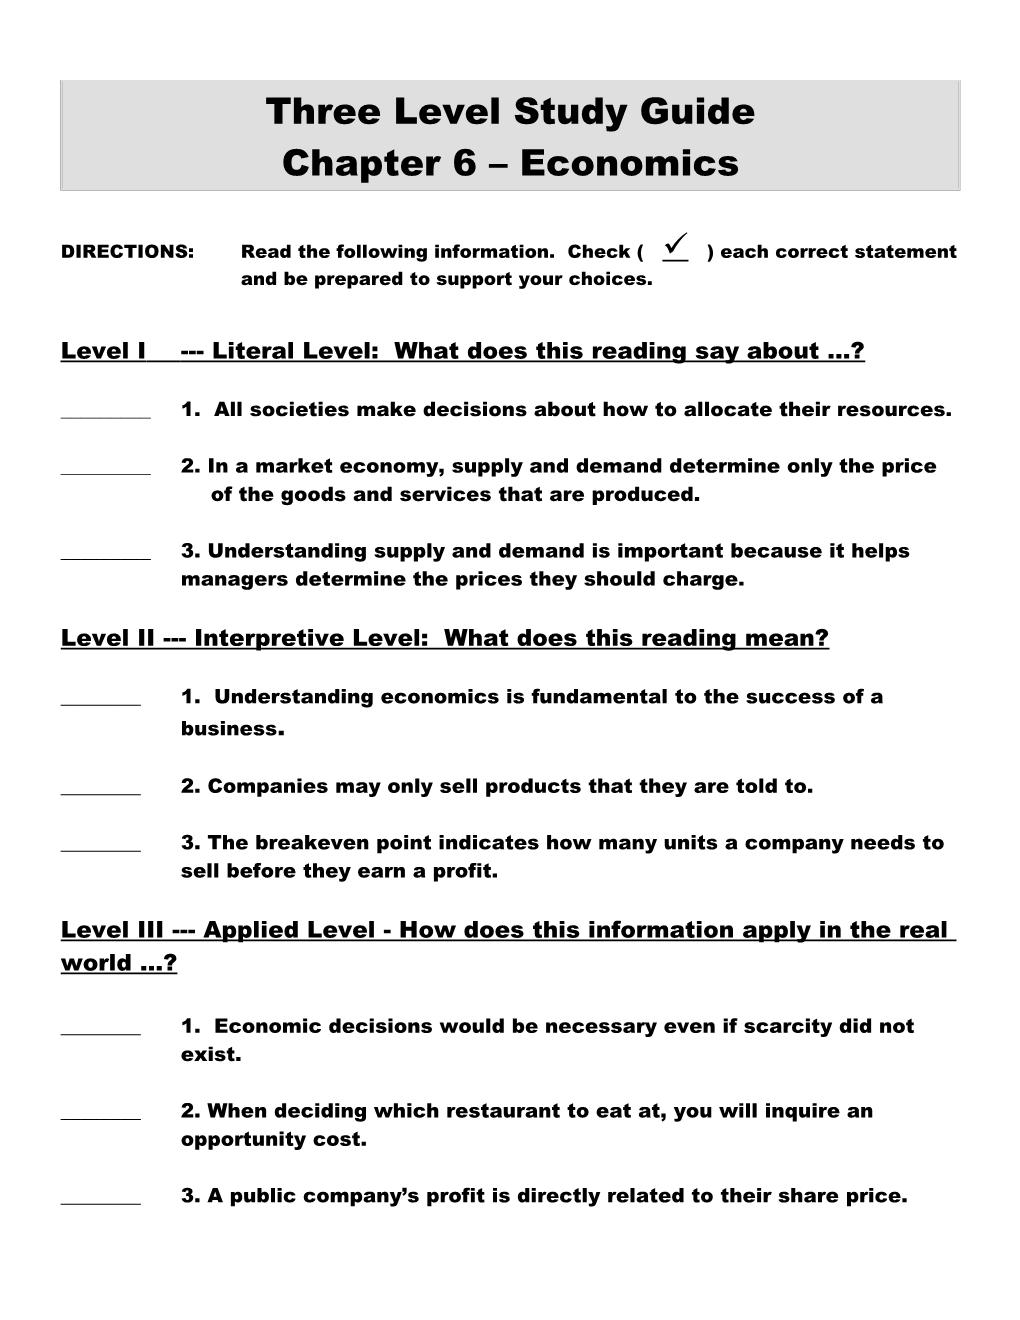 Three Level Study Guide